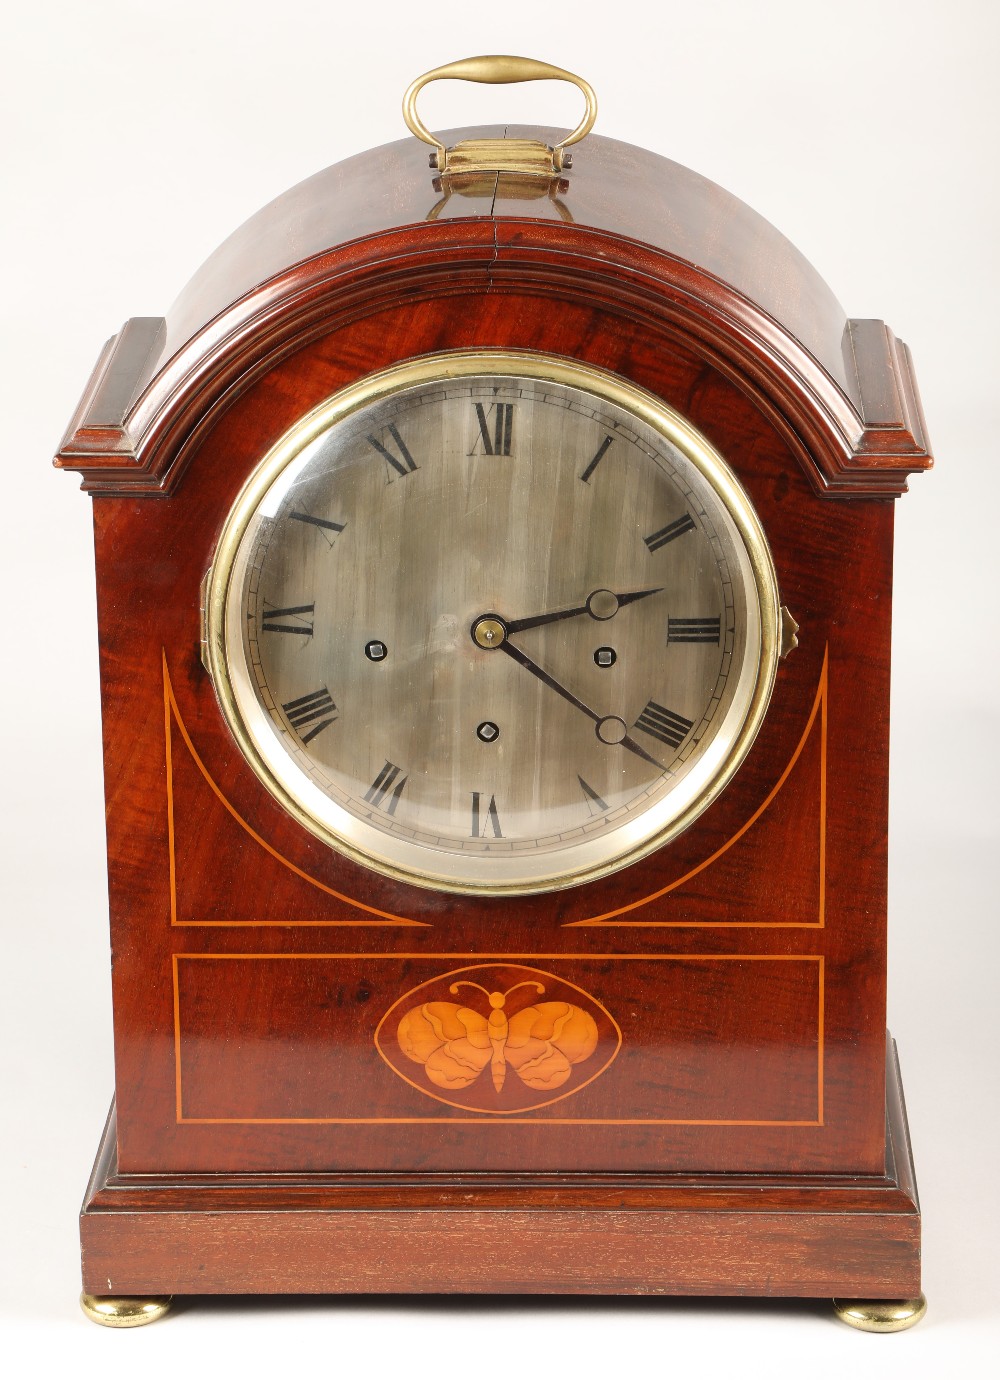 19th century mahogany inlaid bracket clock, 48.5cm high.